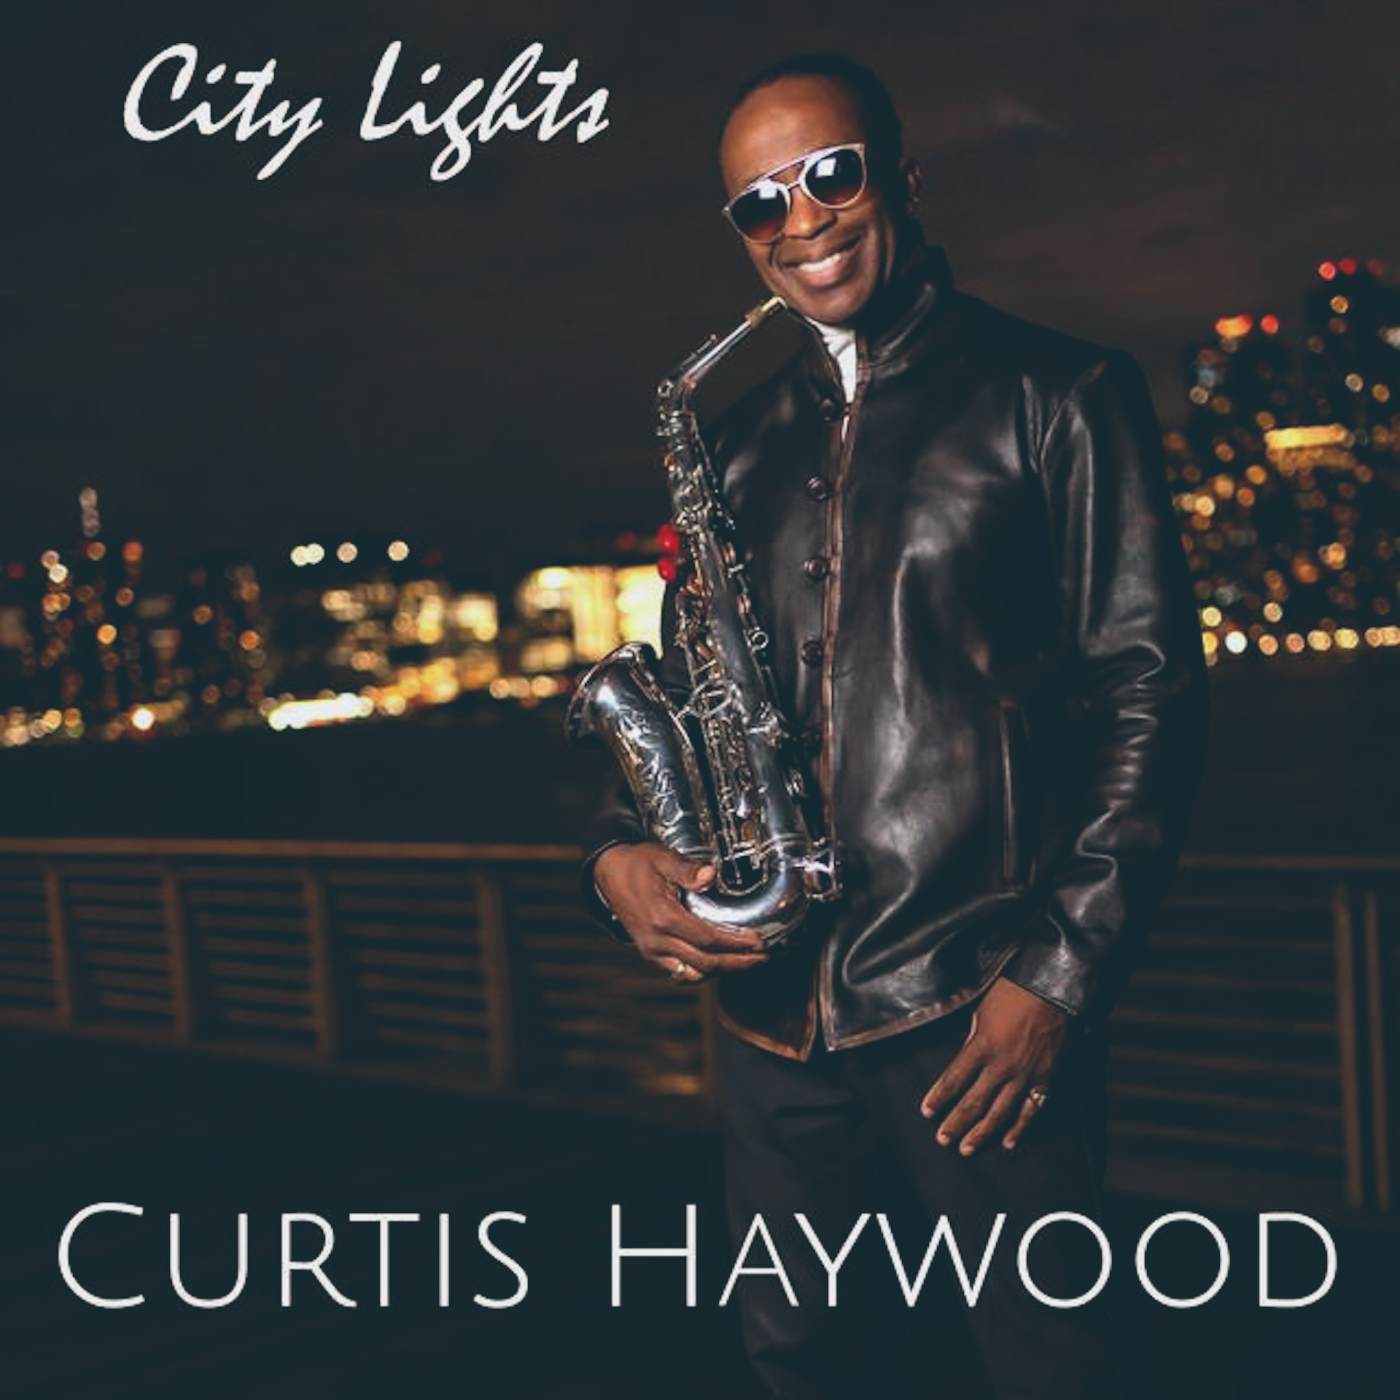 Curtis Haywood